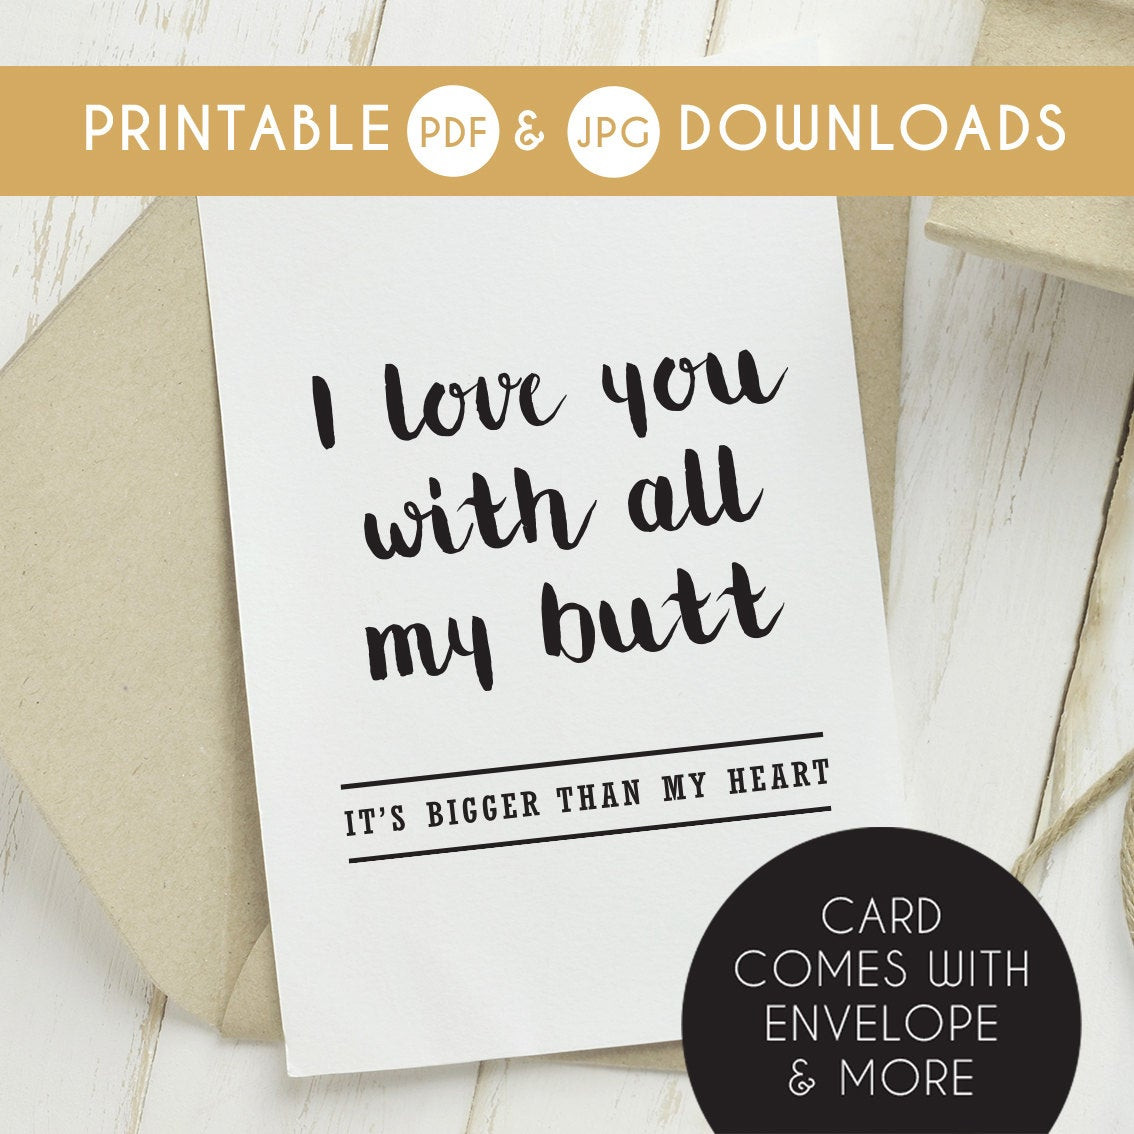 Best ideas about Happy Birthday Card For Boyfriend
. Save or Pin printable funny boyfriend card funny boyfriend birthday card Now.